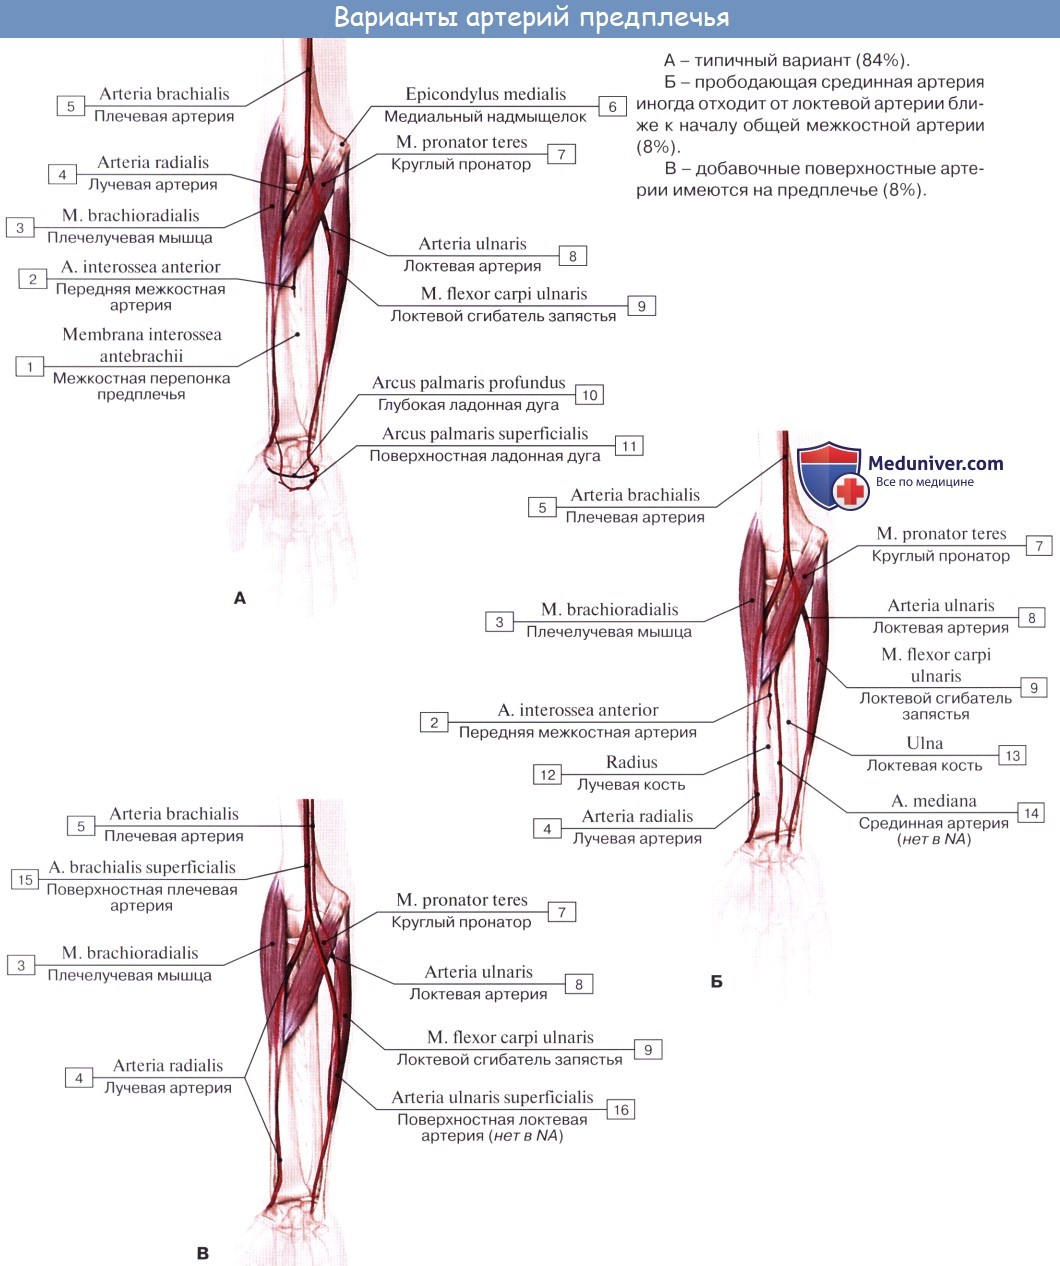 Анатомия: Локтевая артерия, a. ulnaris. Ветви локтевой артерии